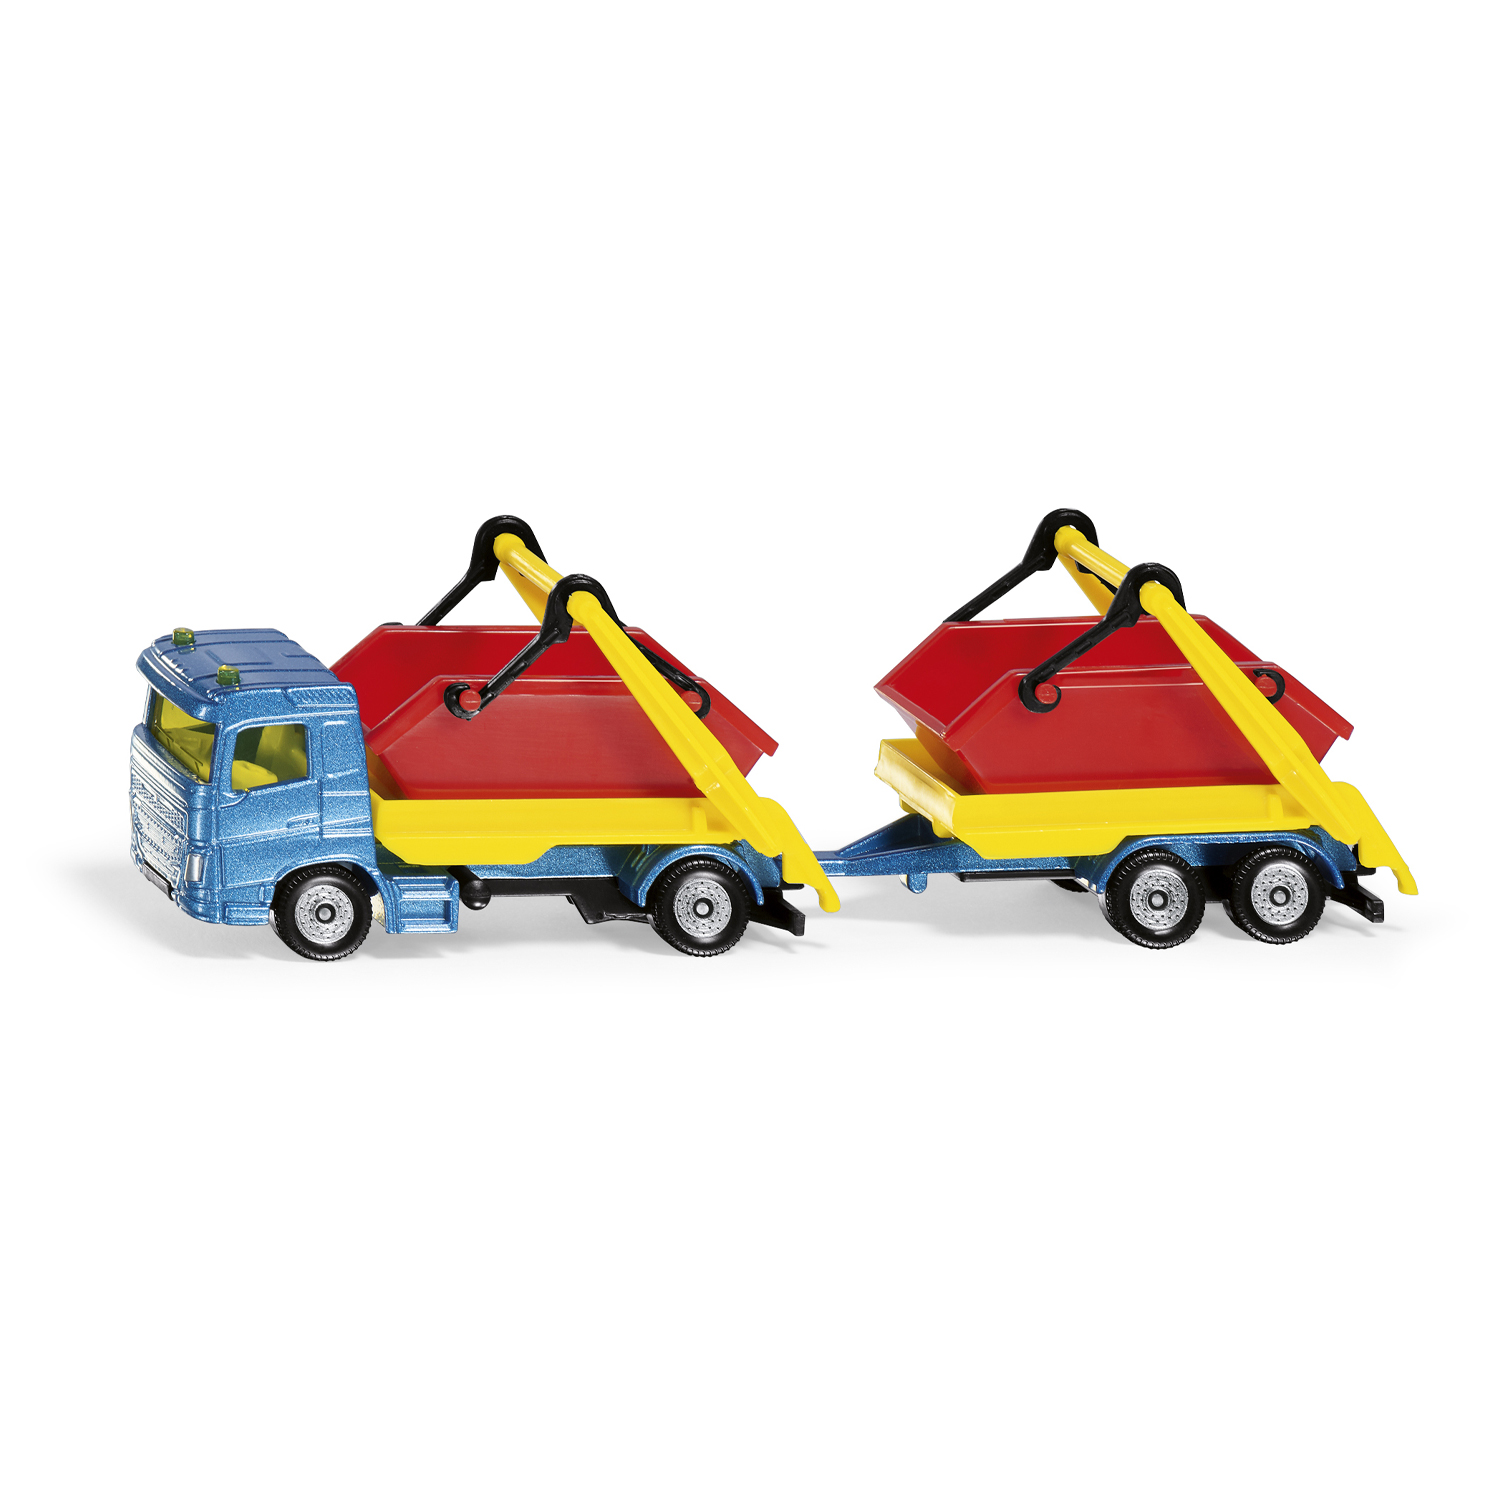 Toy trucks truck with skip & trailer